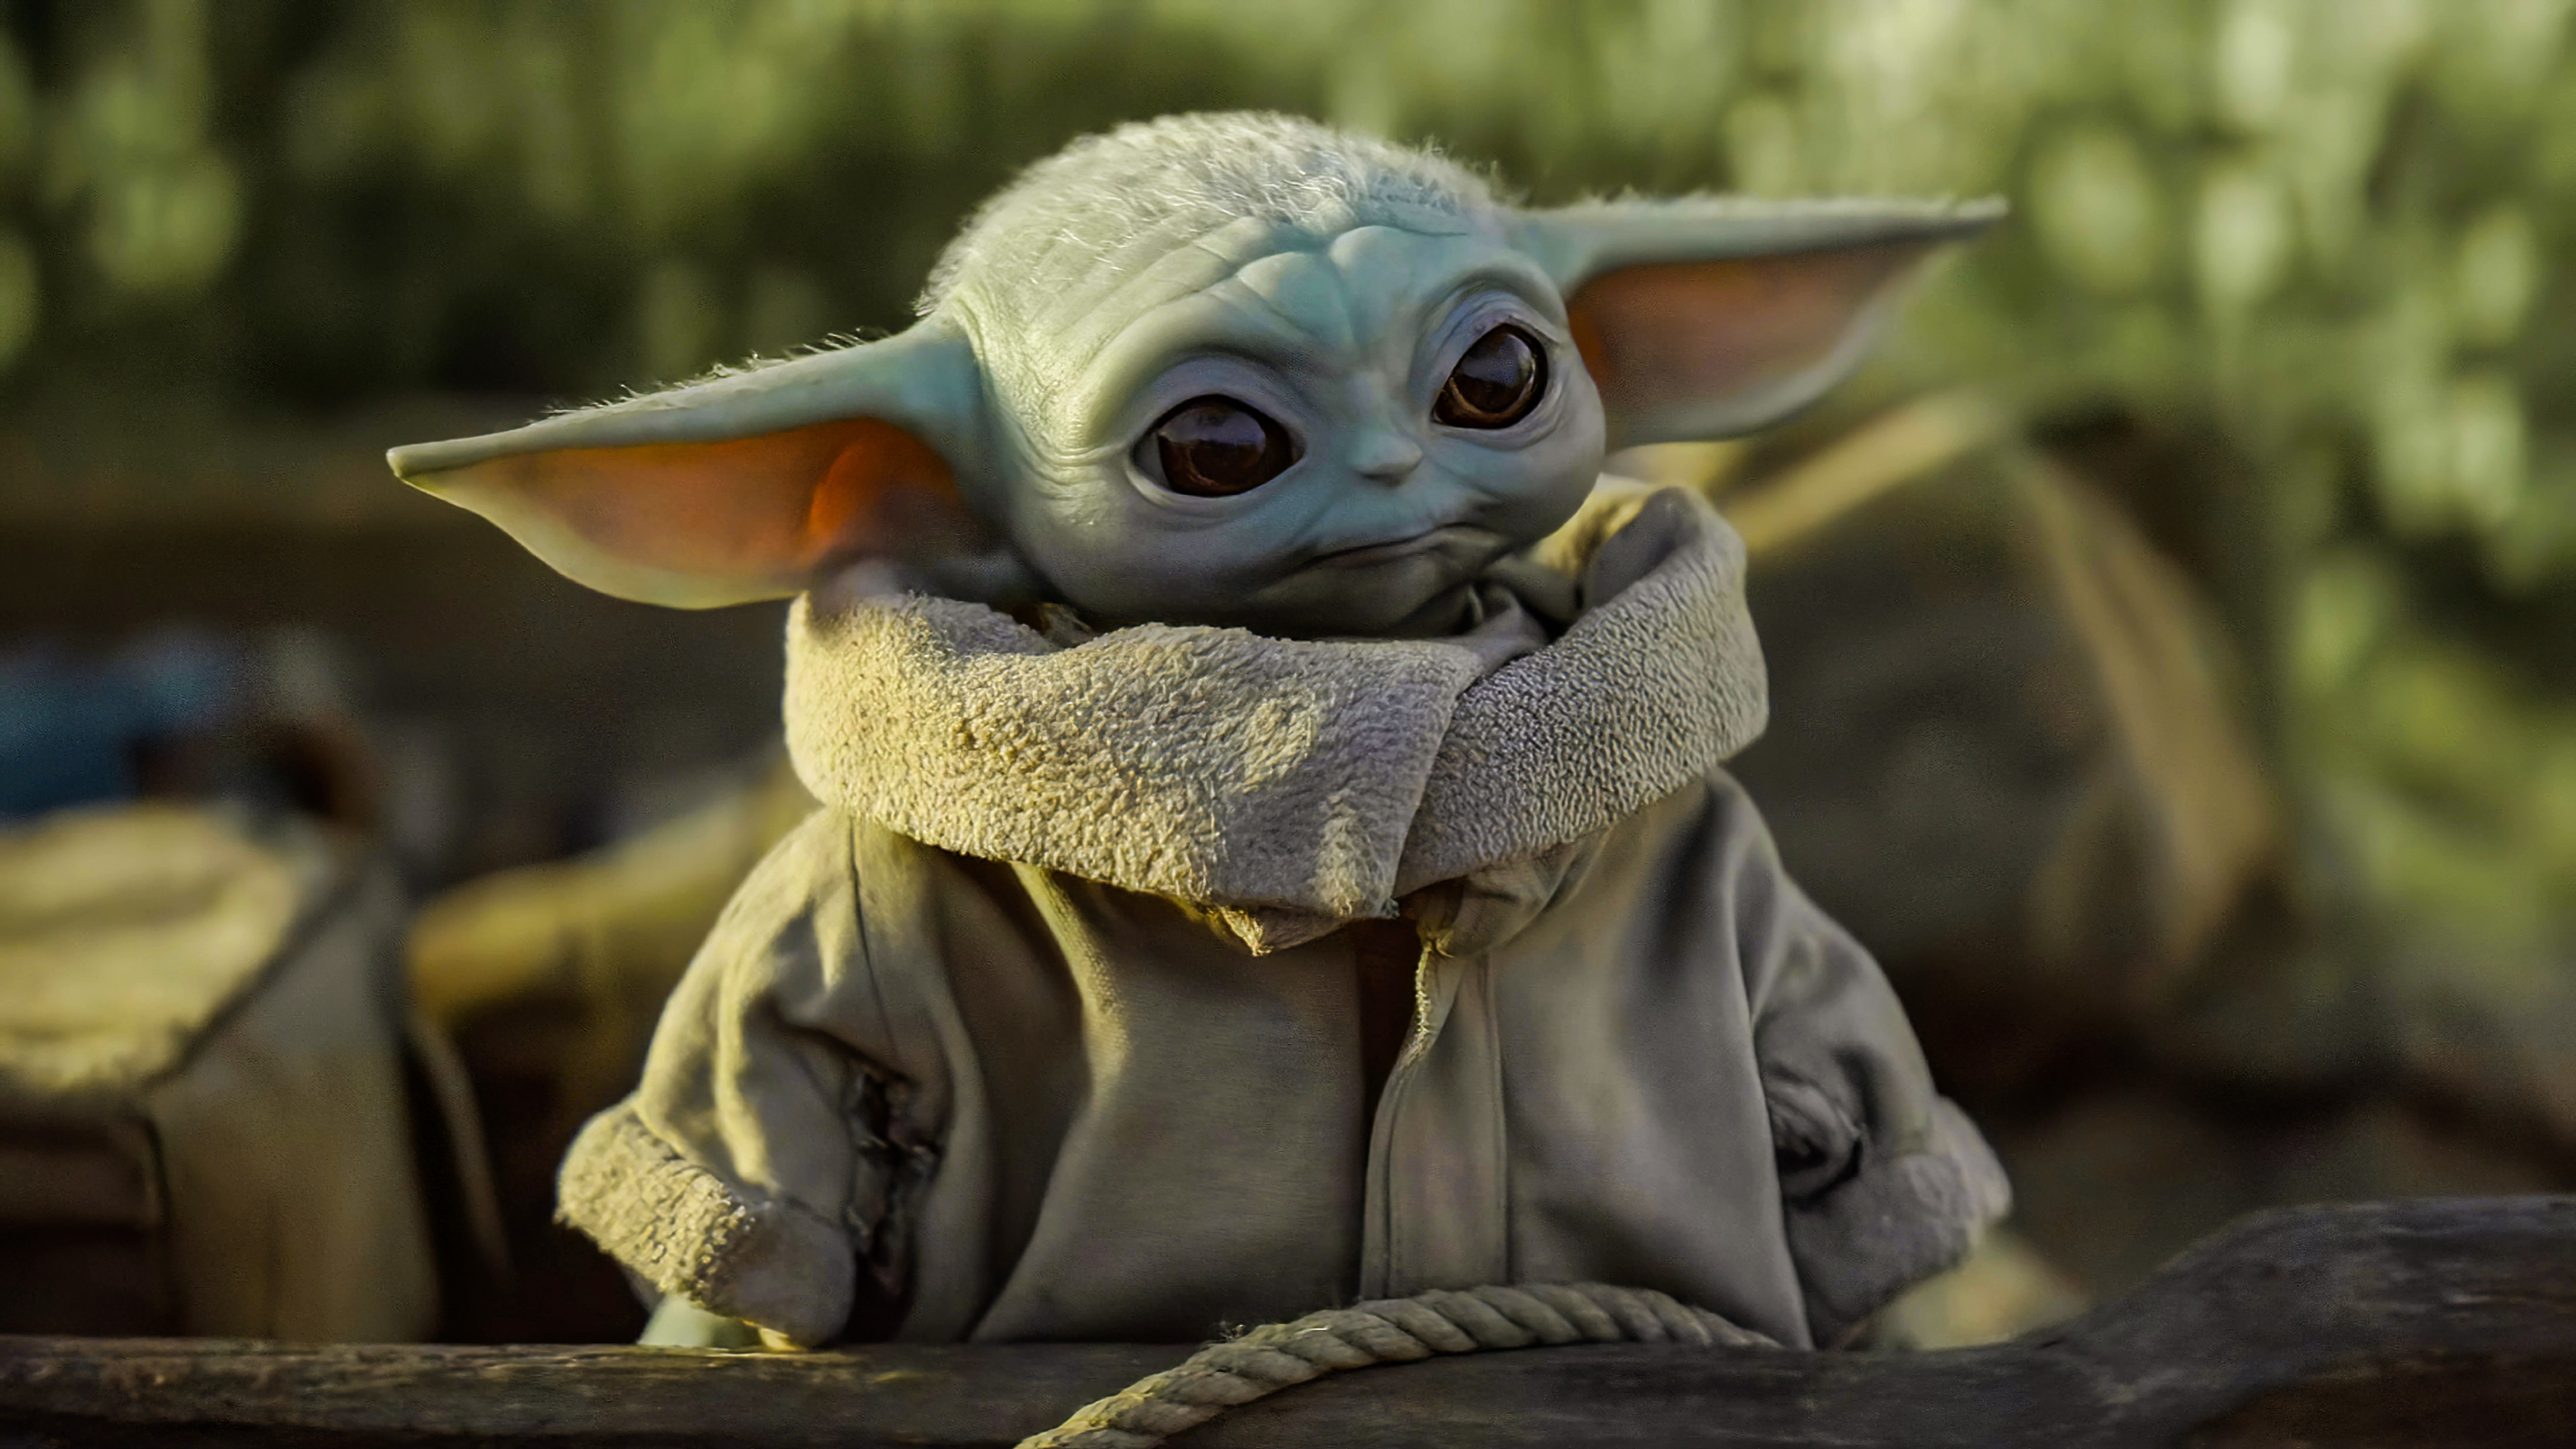 Star Wars Baby Yoda 2 Wallpaper, HD TV Series 4K Wallpapers, Images